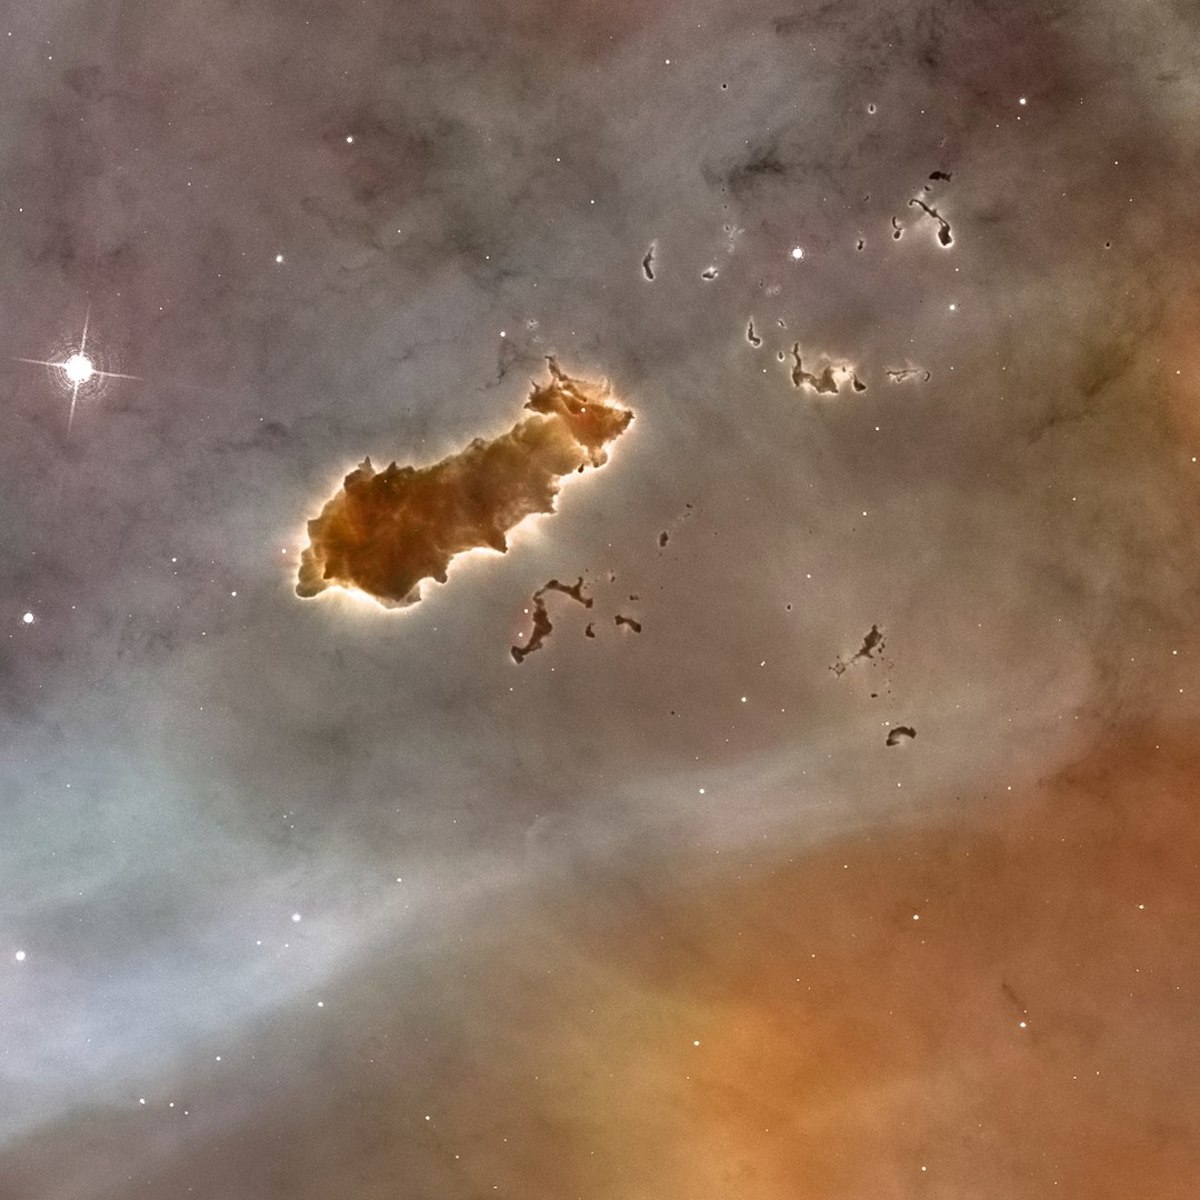 "The Caterpillar" is part of the Carina Nebula.